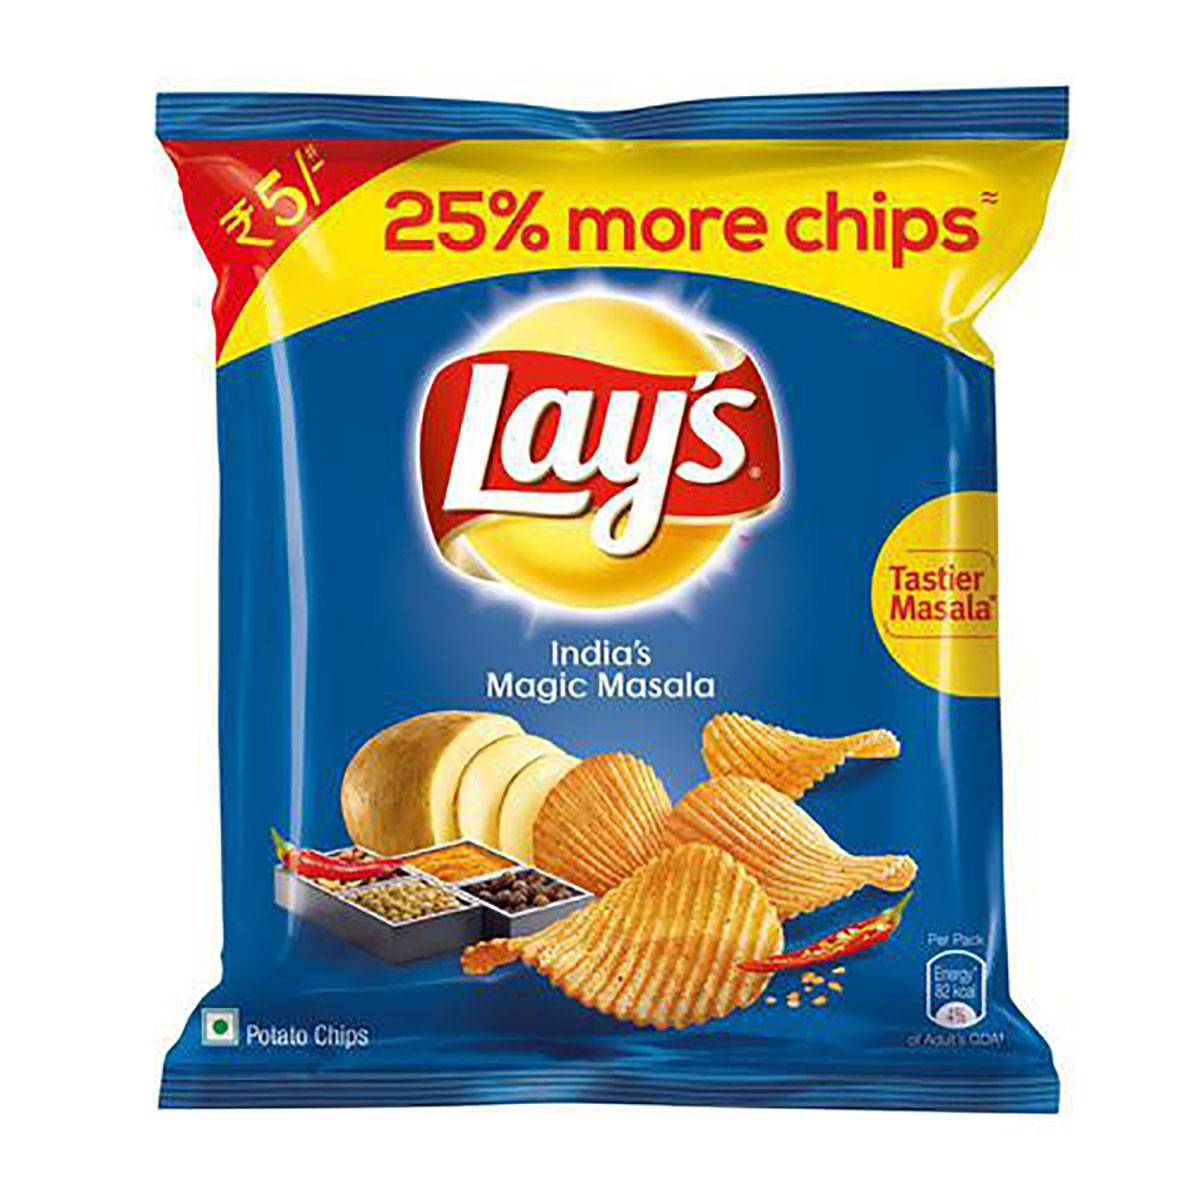 Lays Potato Chips - India's Magic Masala, 11g